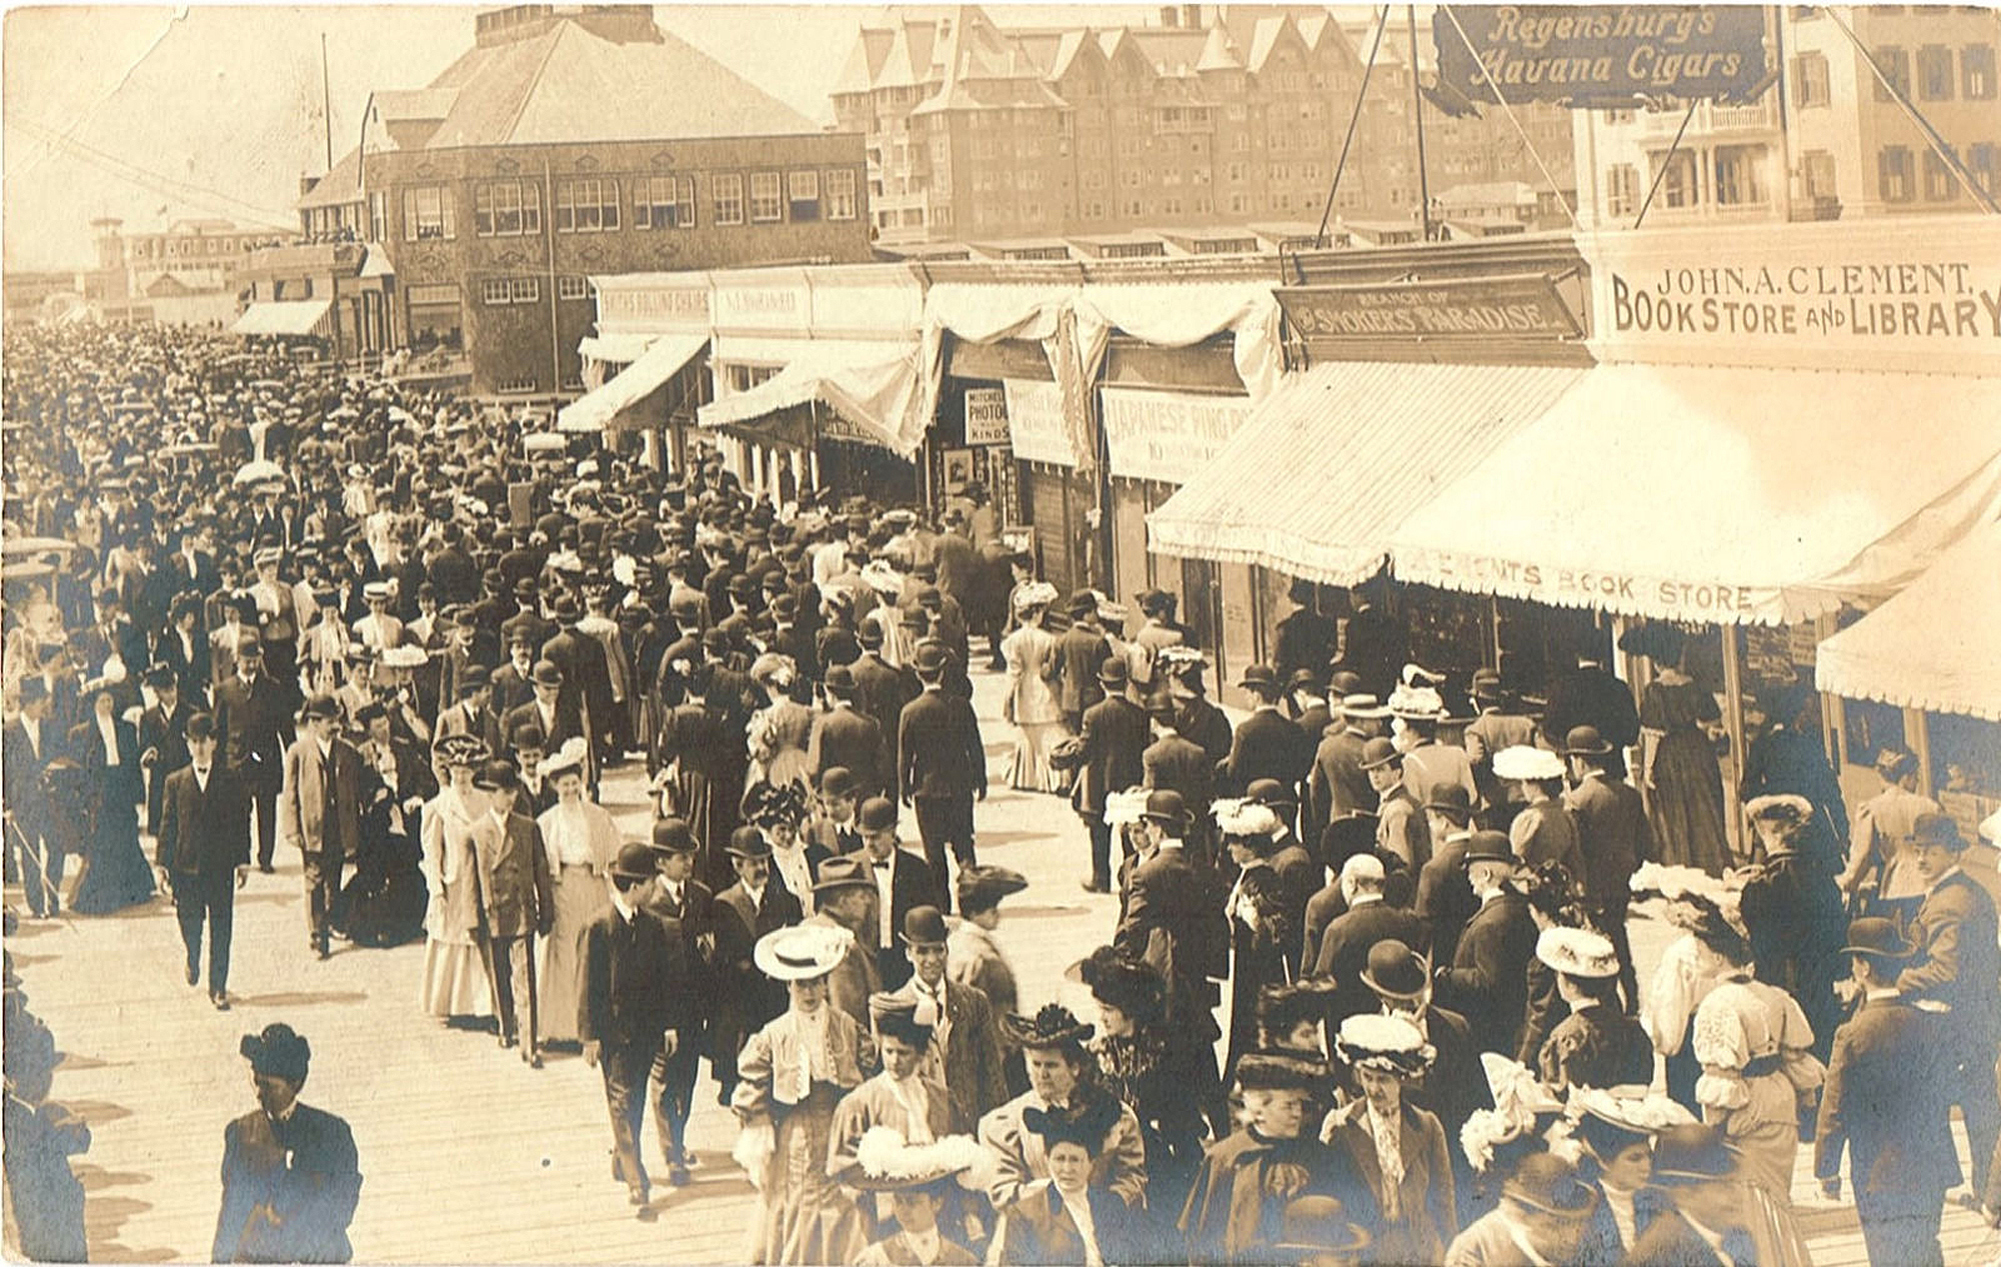 Atlantic City - A Crowed Boardwalk - c 1910